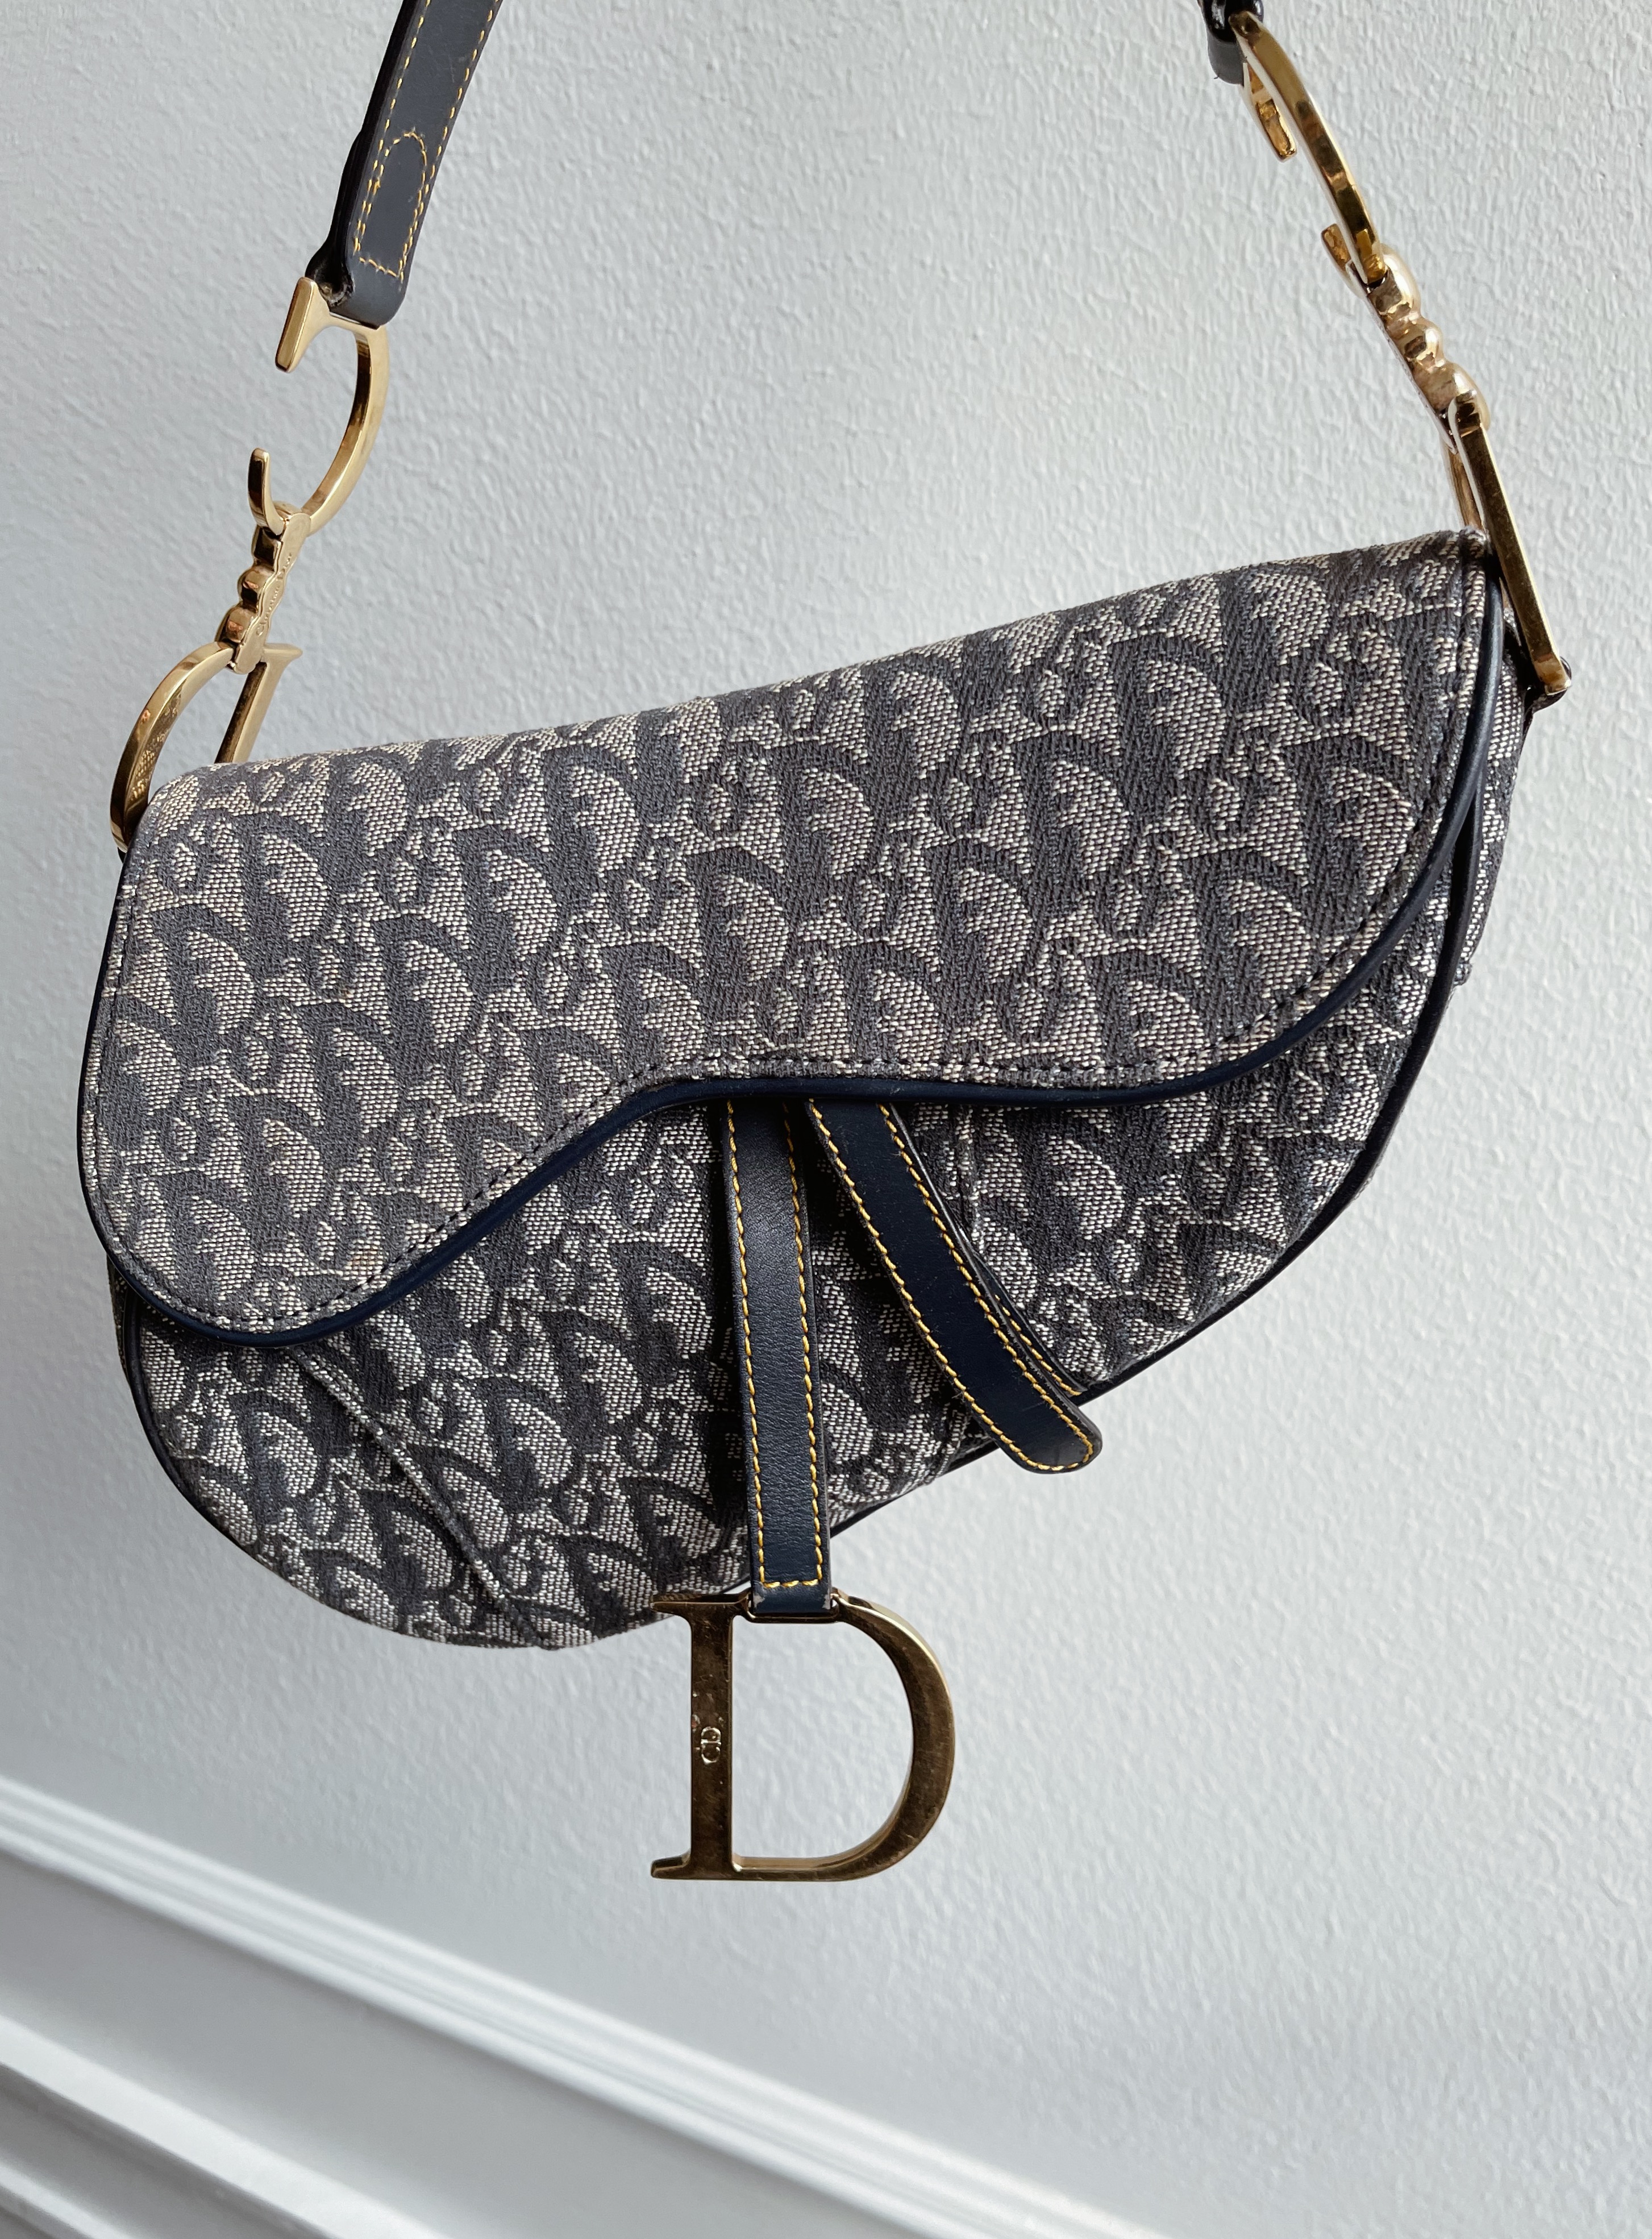 The Good Old Christian Dior Saddle Bag  Decadent Dissonance